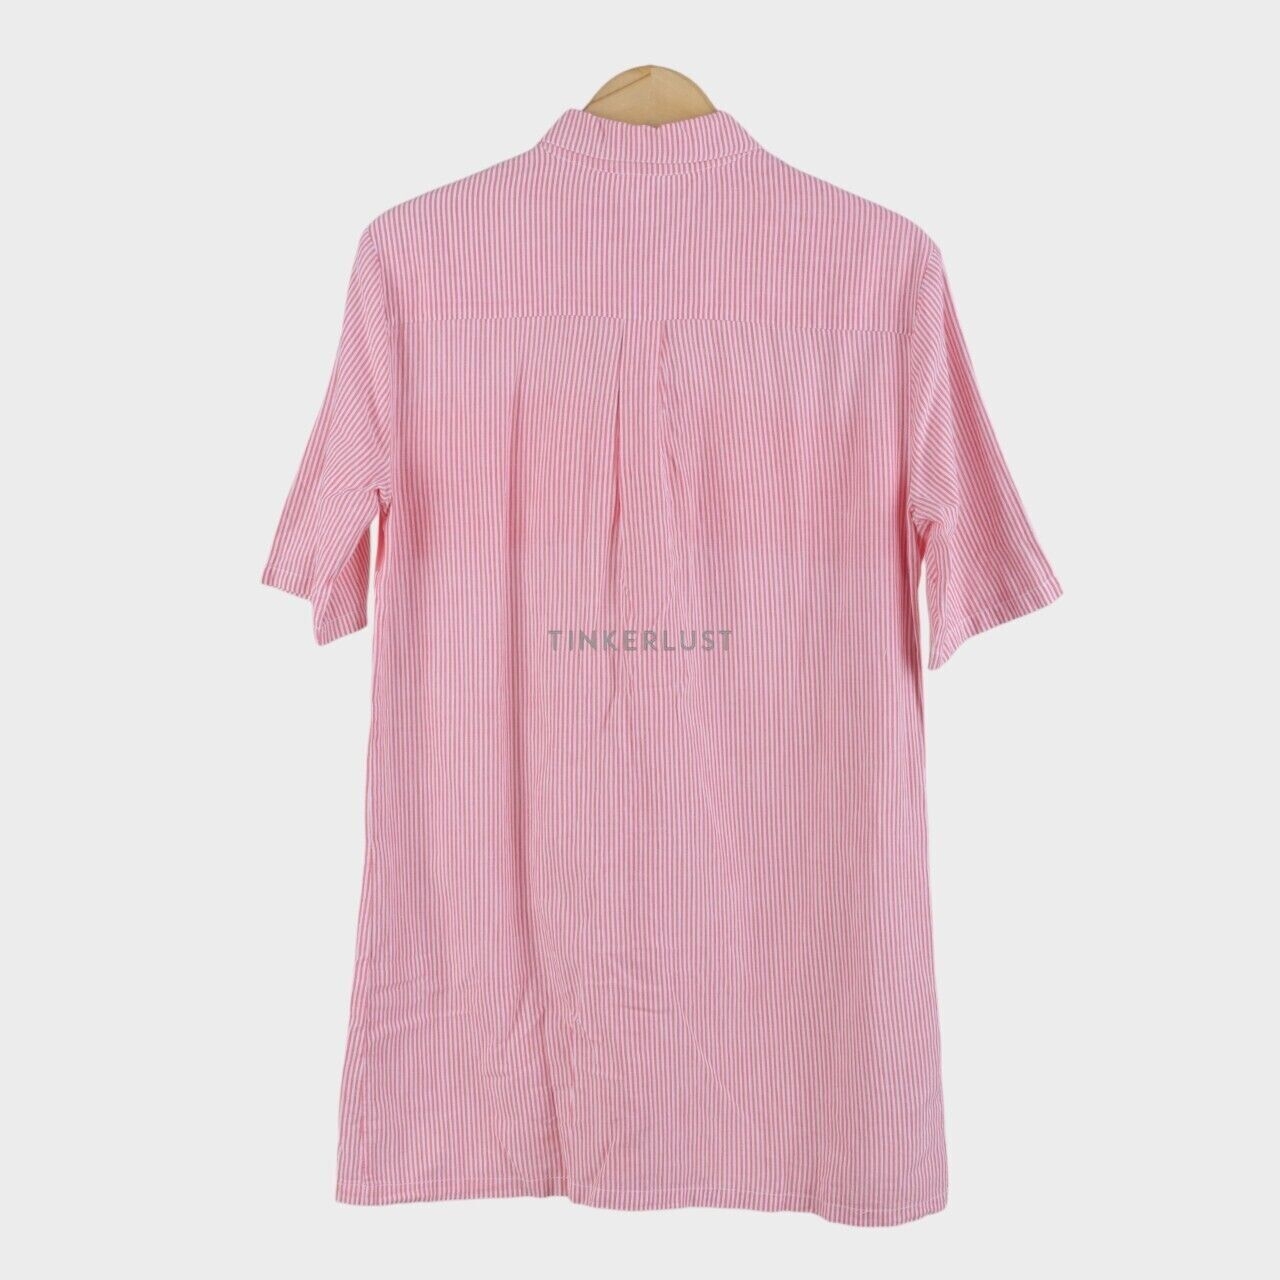 Mango Pink & White Stripes Shirt